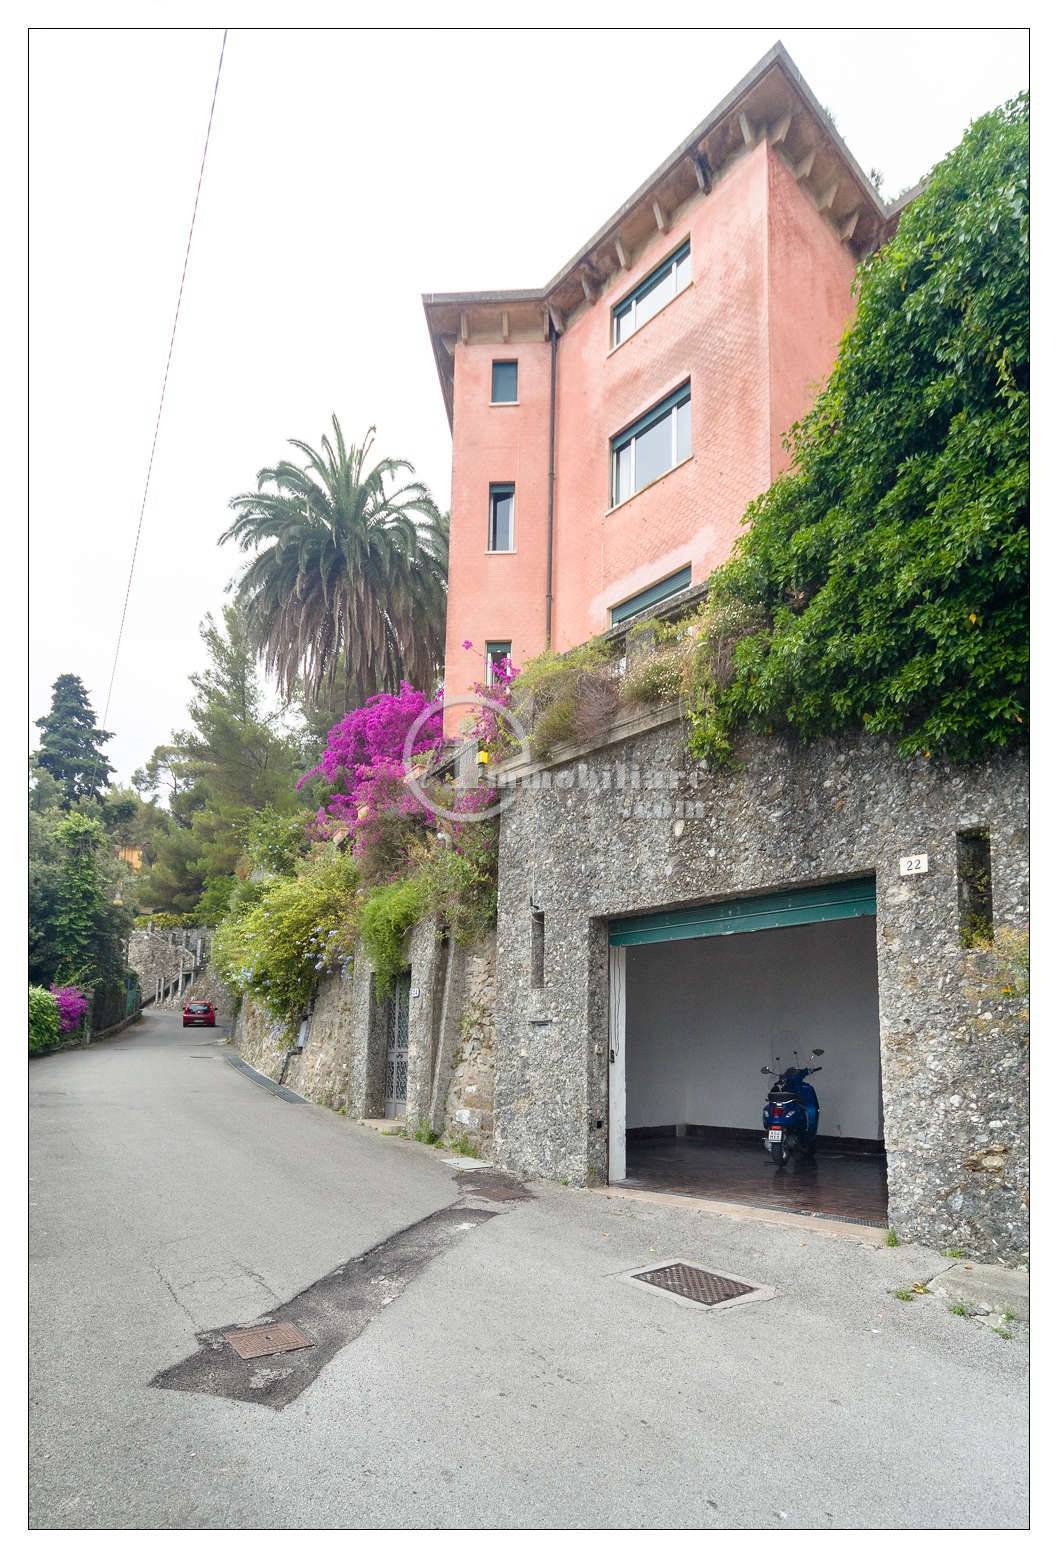 Villa in Vendita a Santa Margherita Ligure: 5 locali, 600 mq - Foto 12